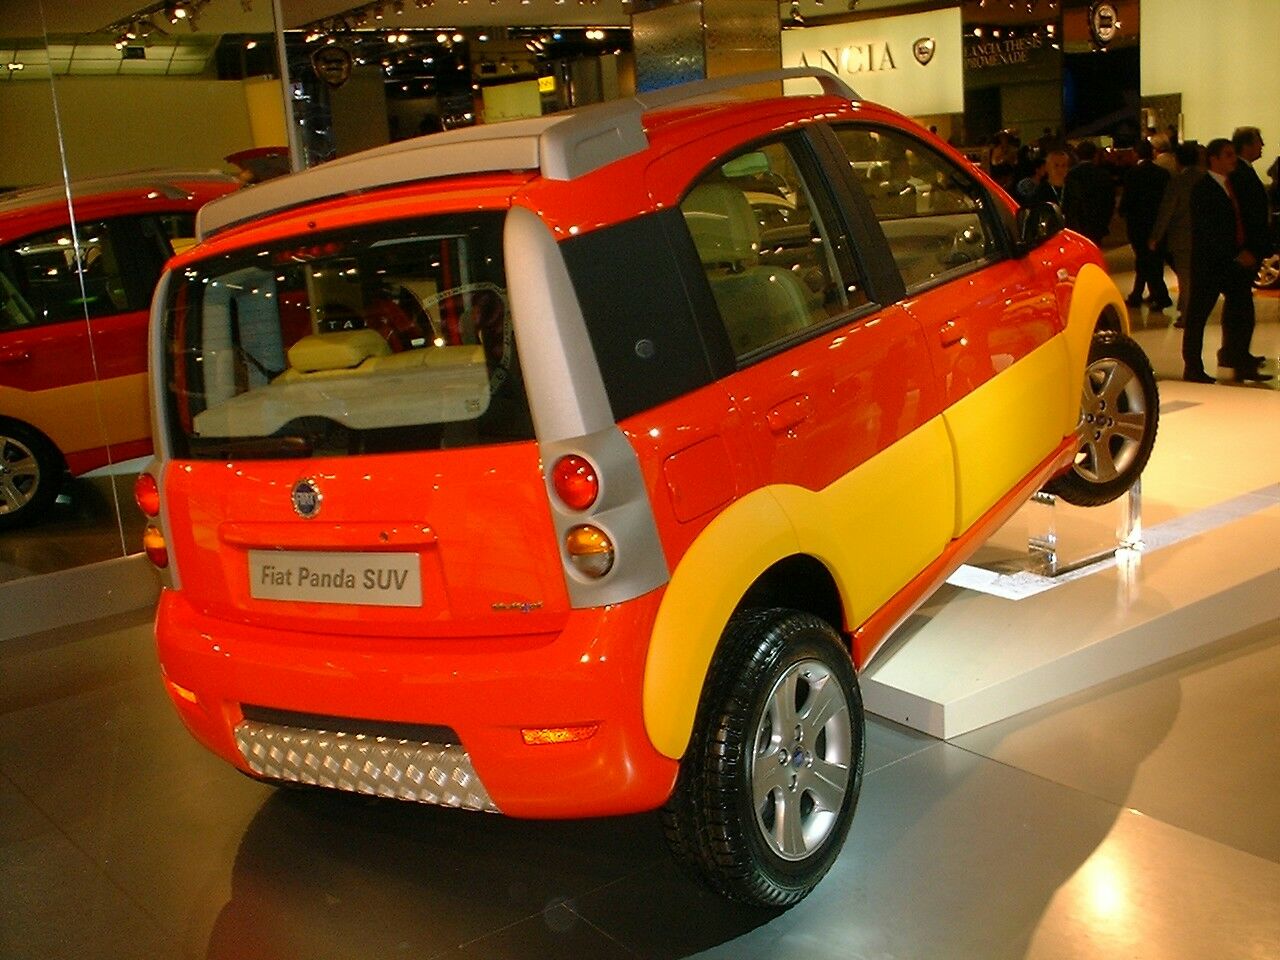 The Fiat Panda SUV at the 2003 Frankfurt Motor Show